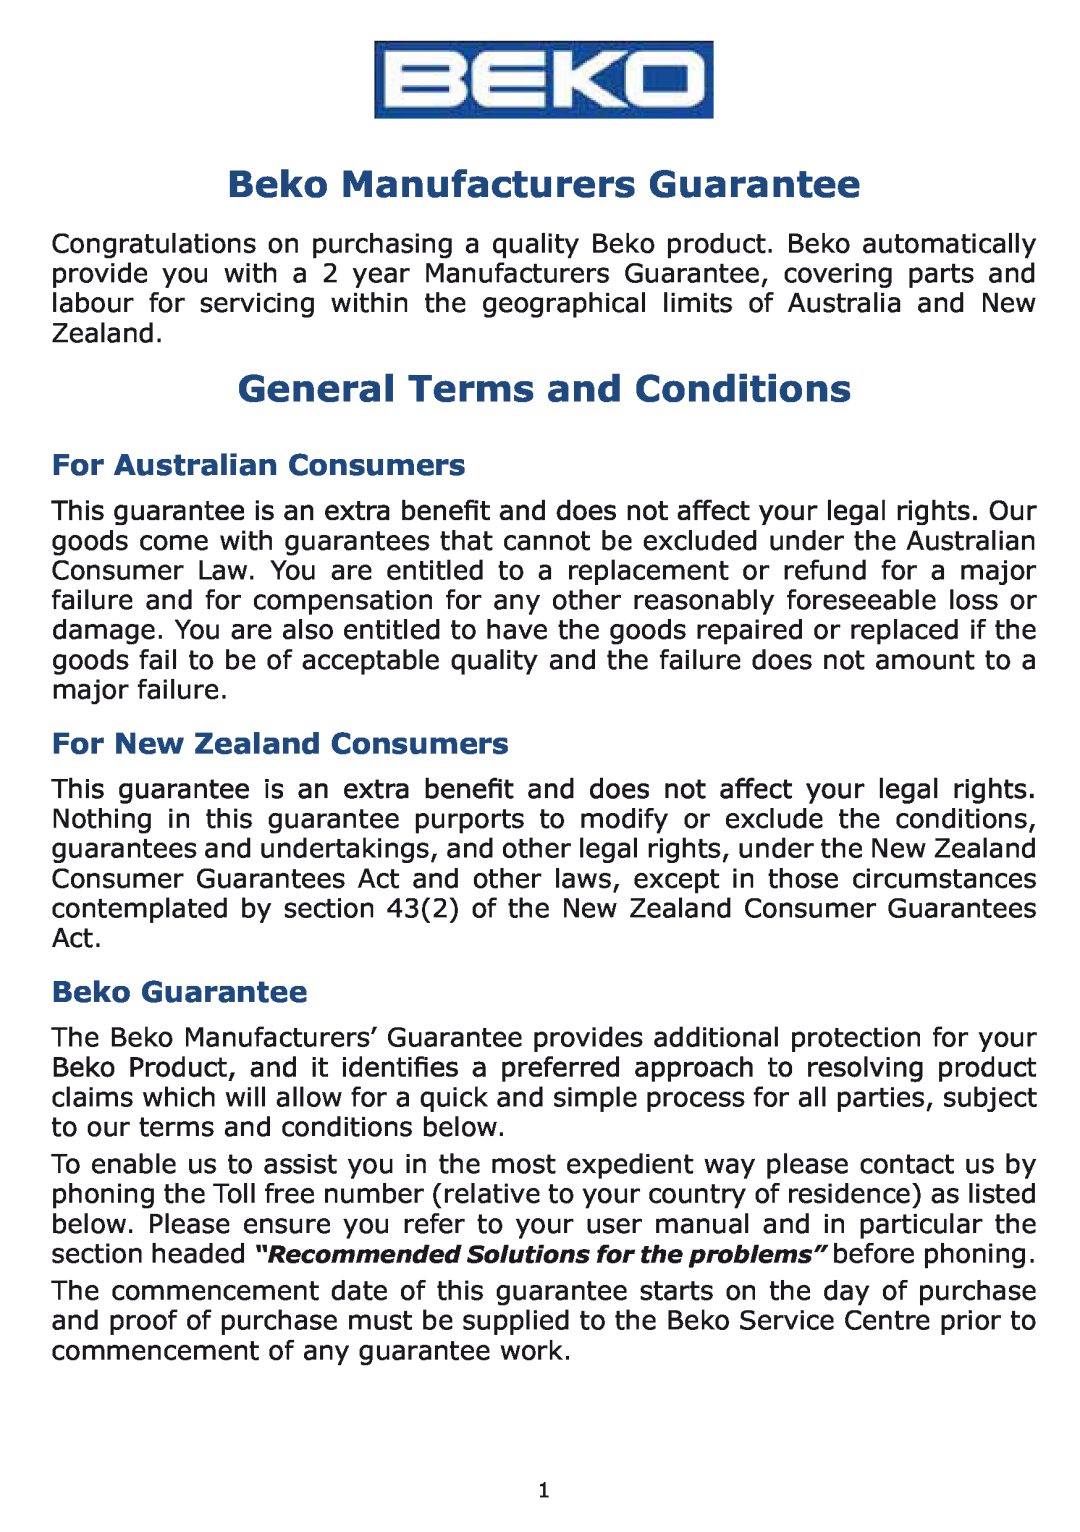 Beko CCB 7140 XA Beko Manufacturers Guarantee, General Terms and Conditions, For Australian Consumers, Beko Guarantee 